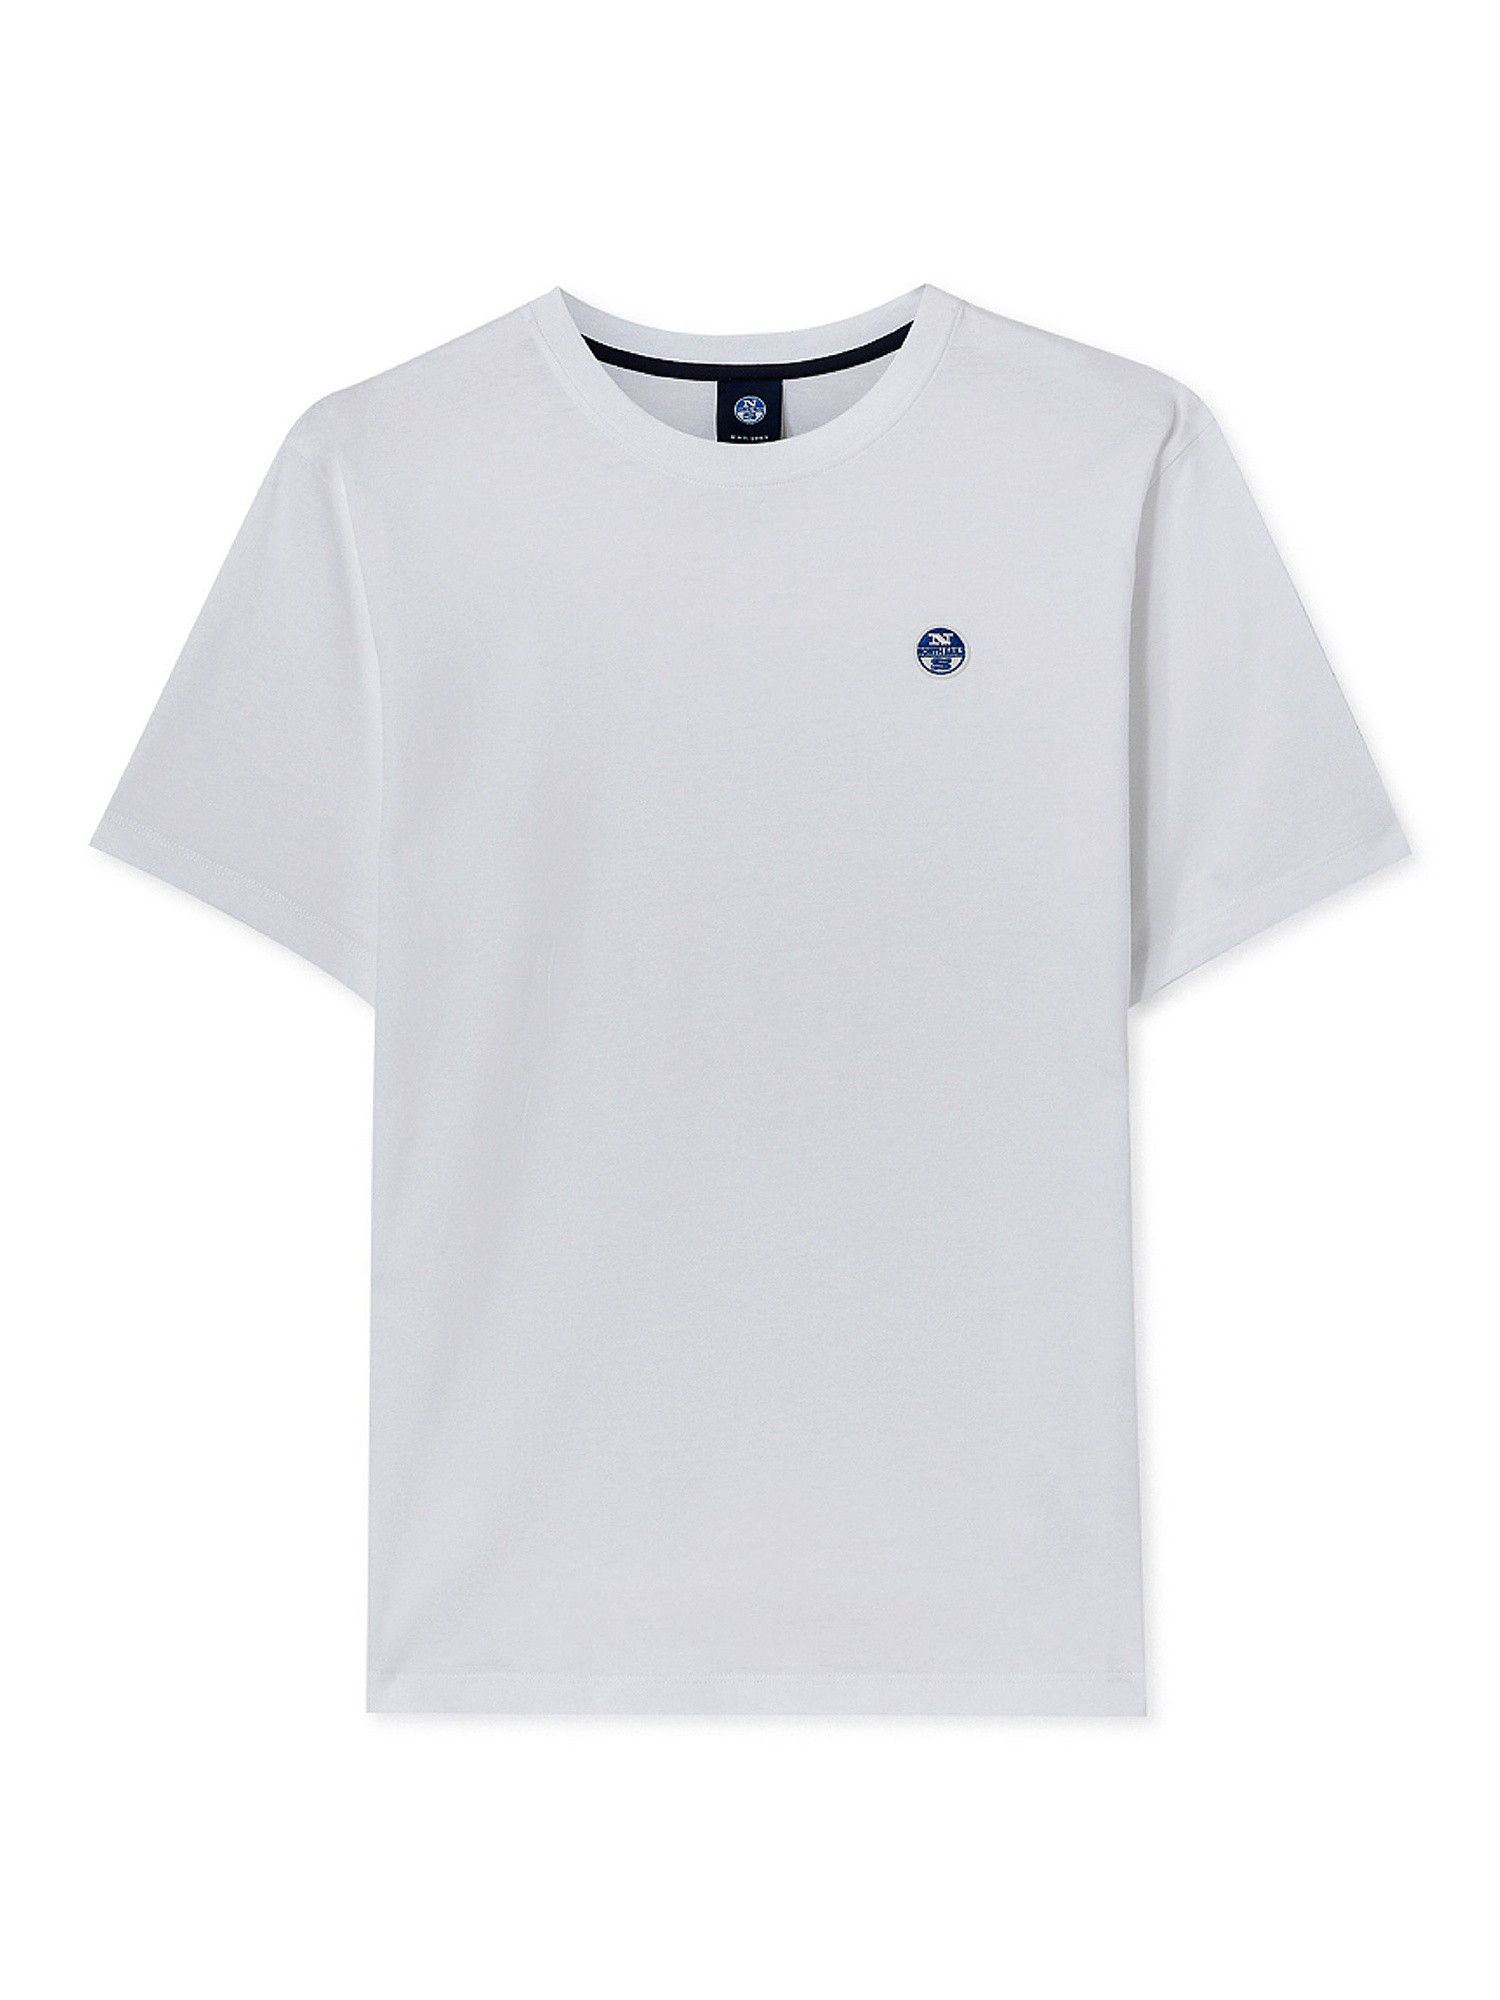 T-shirt manica corta con logo, Bianco, large